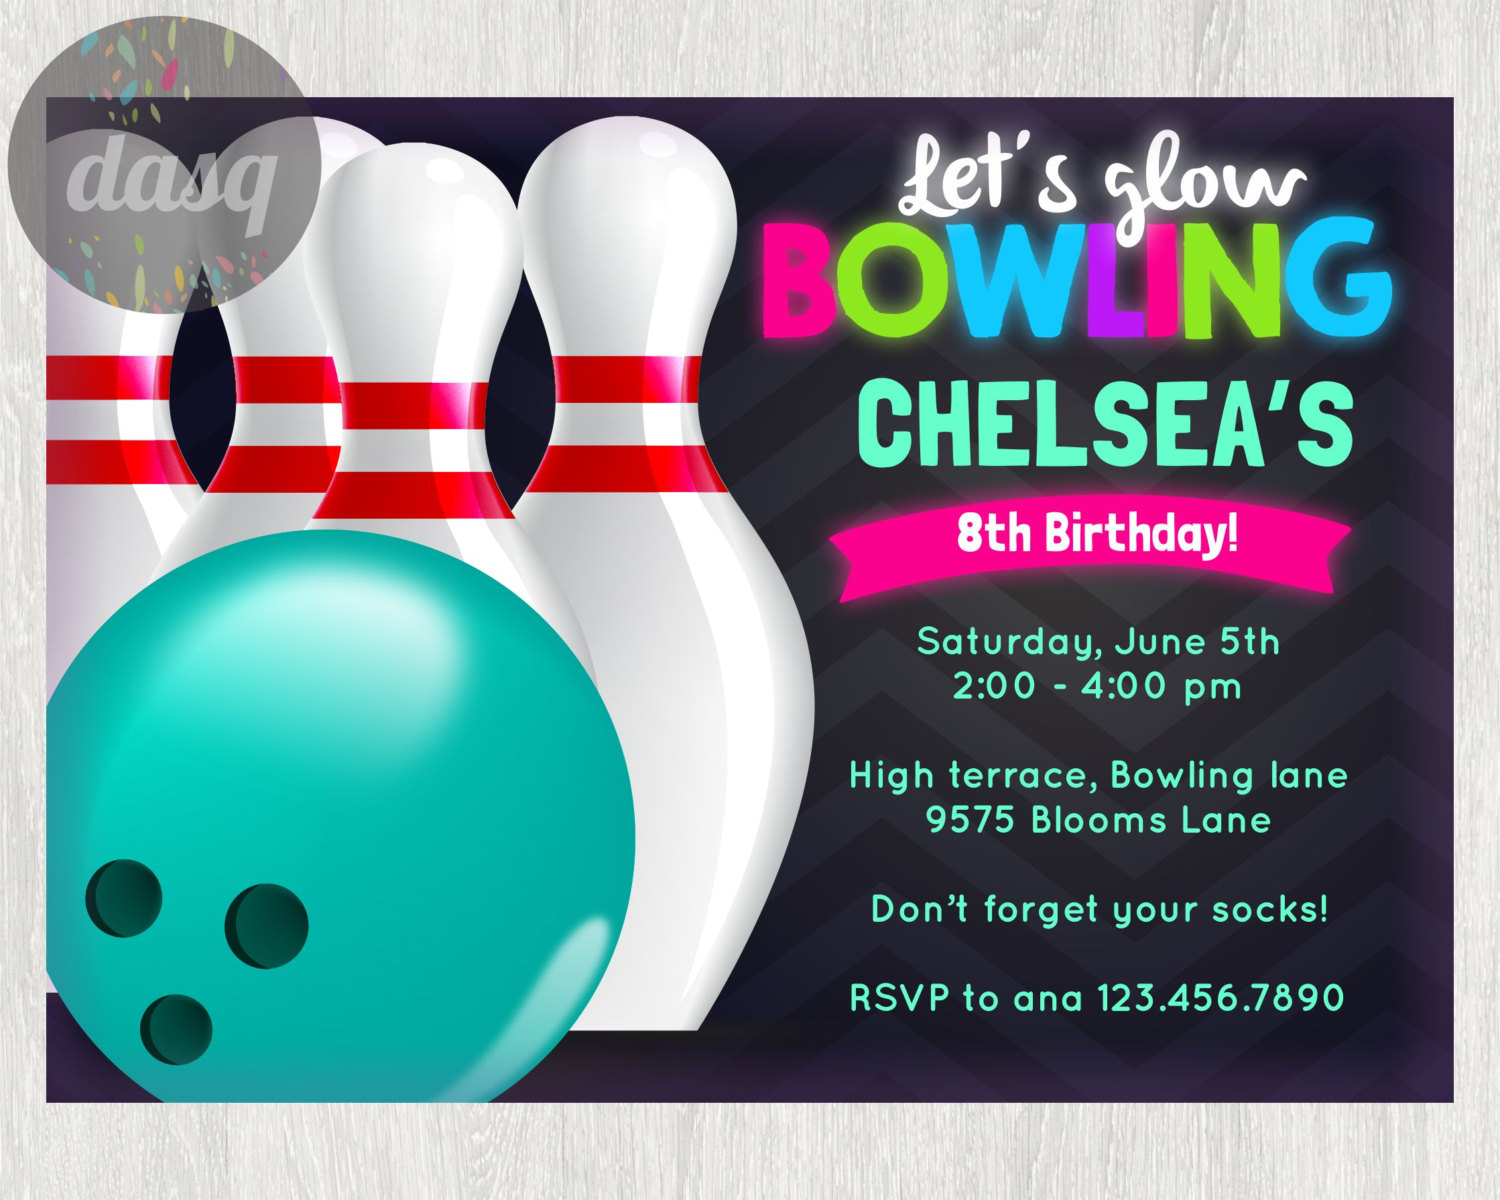 free-printable-bowling-birthday-invitations-dolanpedia-invitations-ideas